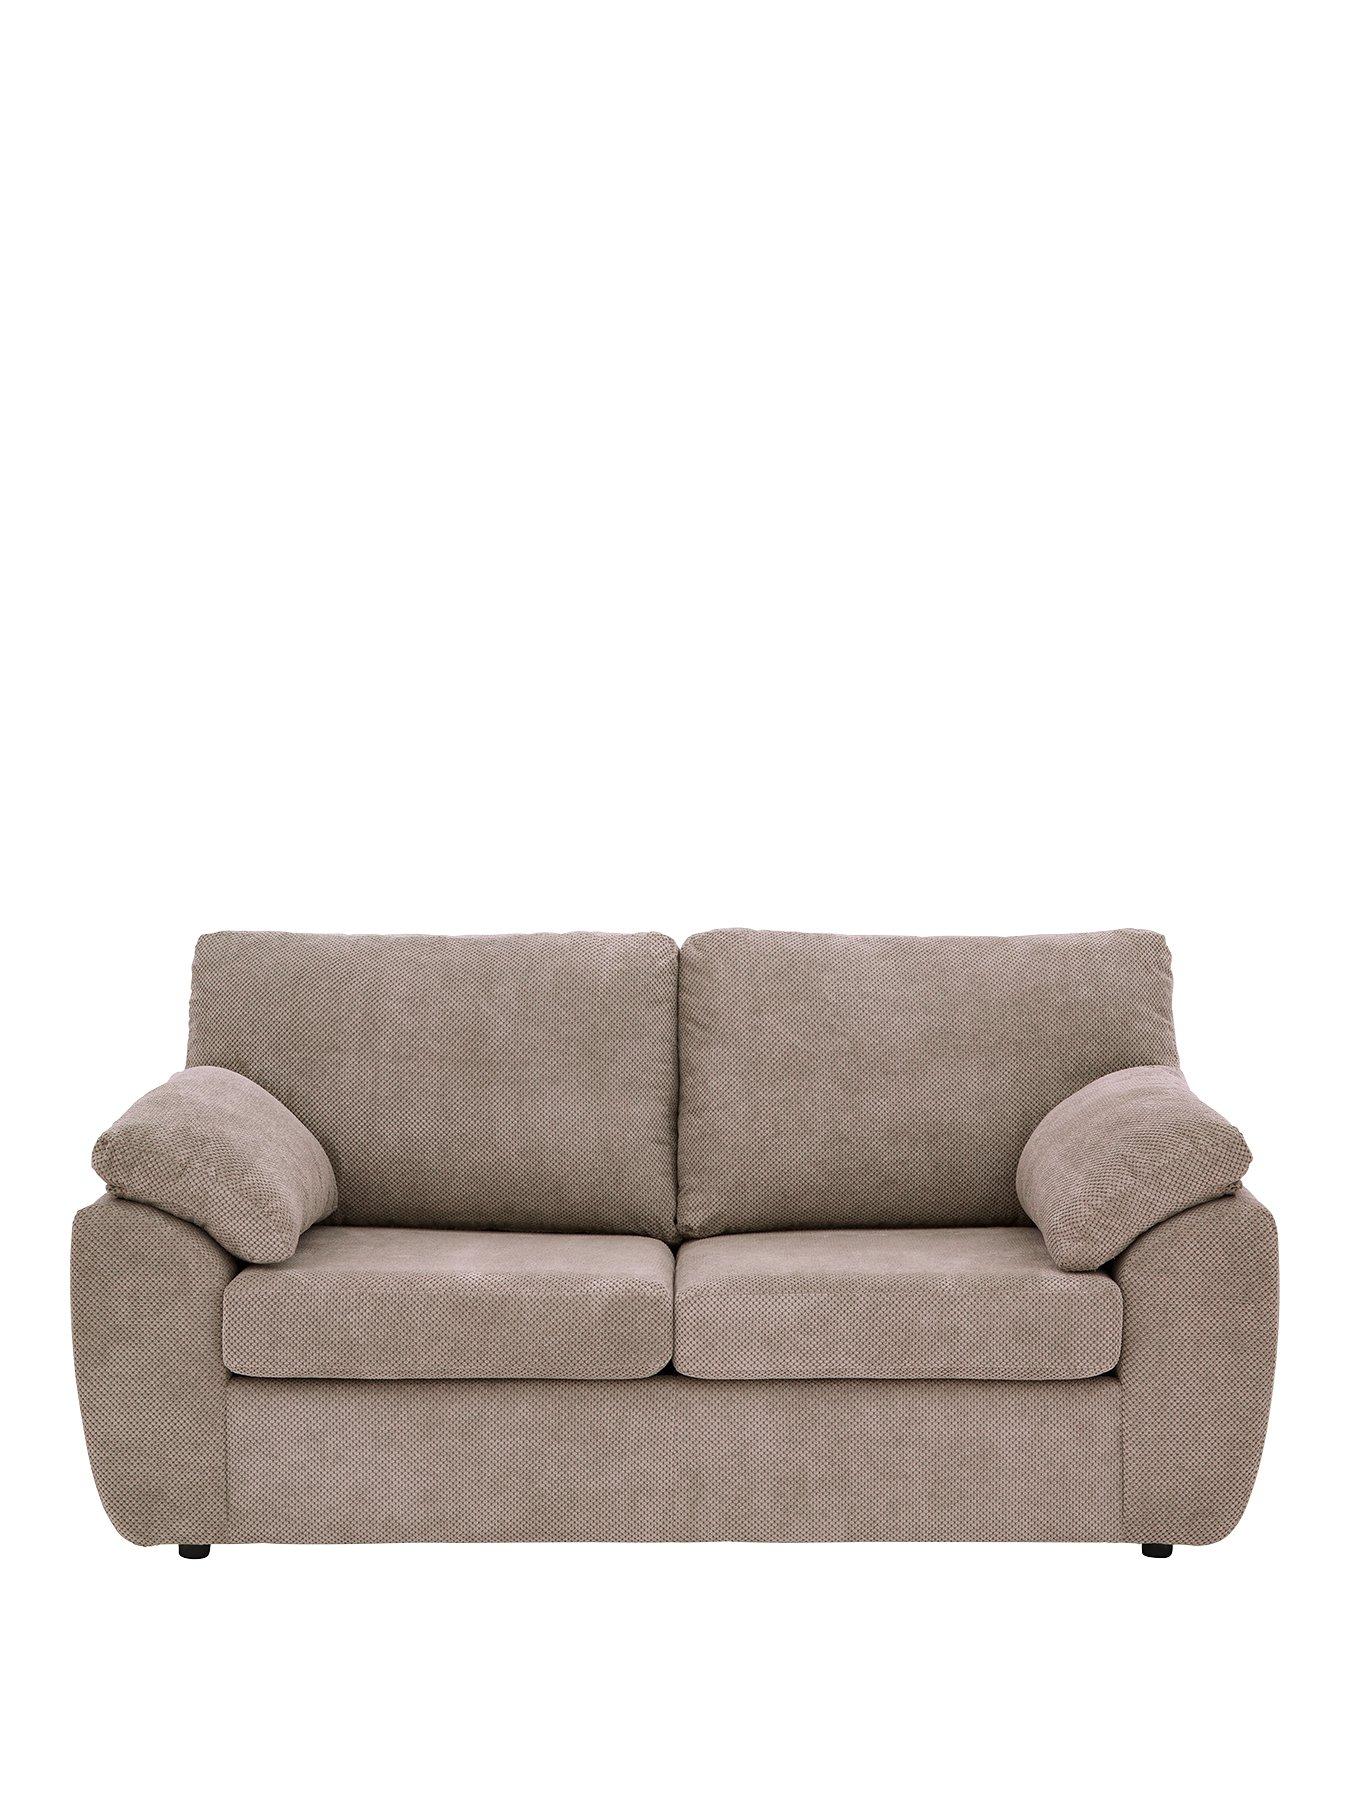 dixie-fabric-sofa-bed.jpg?$180x240_retinamobilex2$